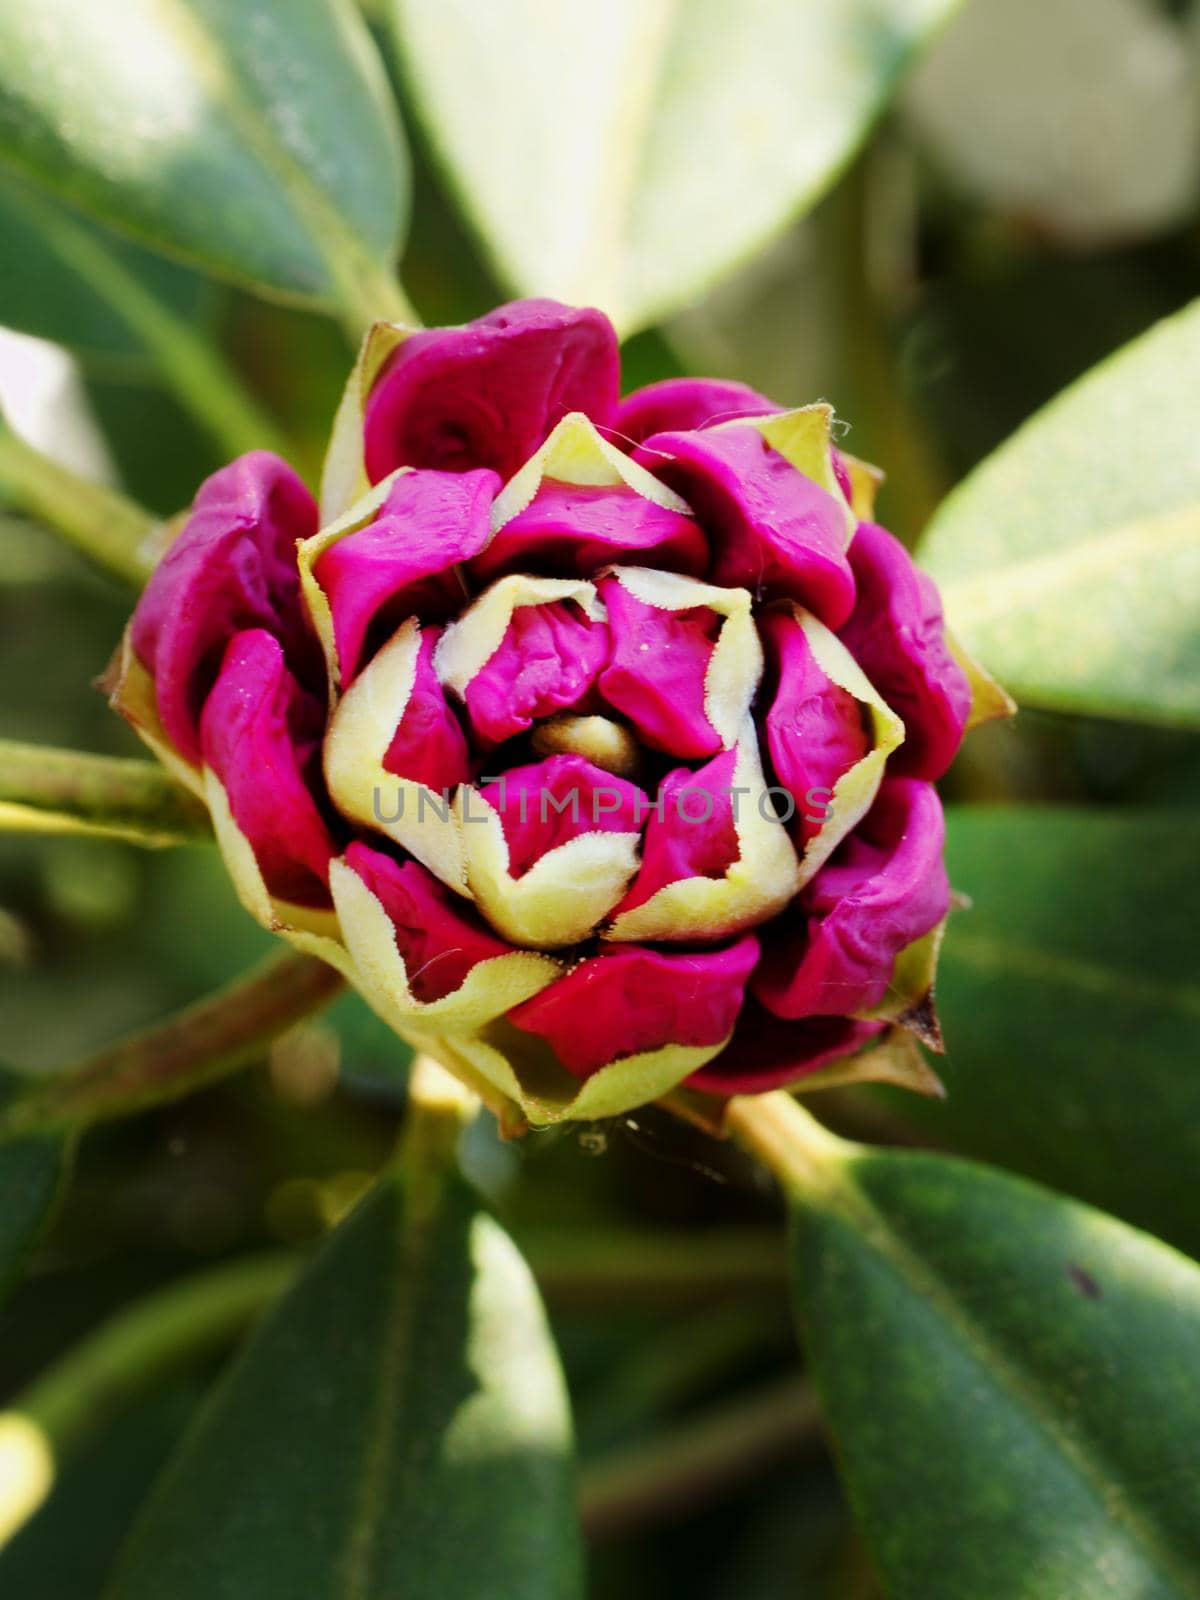 Bud detail. Purple Rhododendron flower bud, by rdonar2